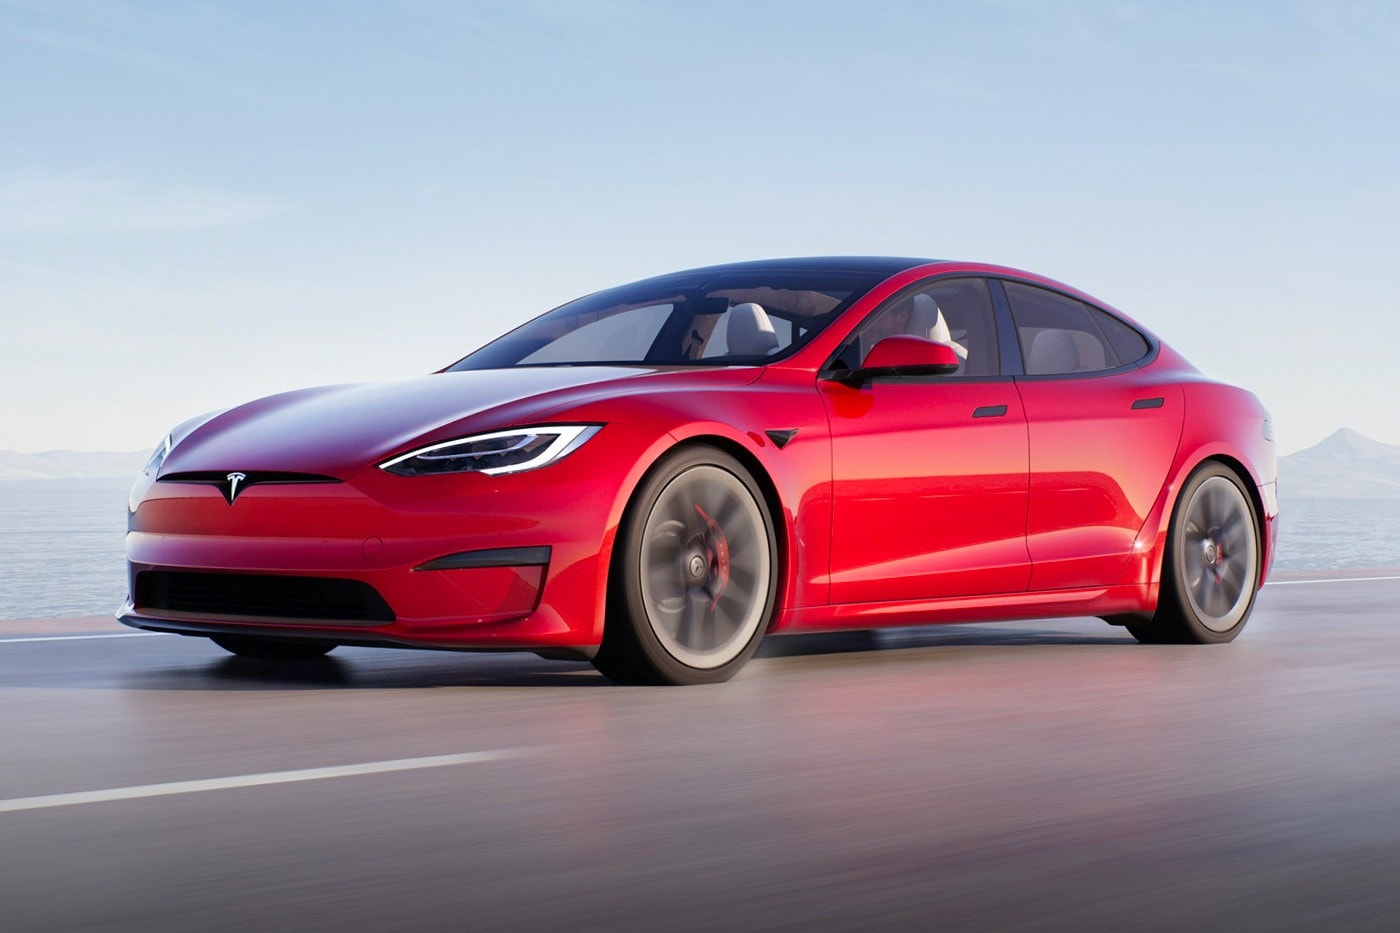 Jay Leno World Record 1/4 Mile Quarter Land Speed Fastest Car Acceleration Tesla Model S Plaid Elon Musk Drag Strip Racing Watch 'Jay Leno's Garage'